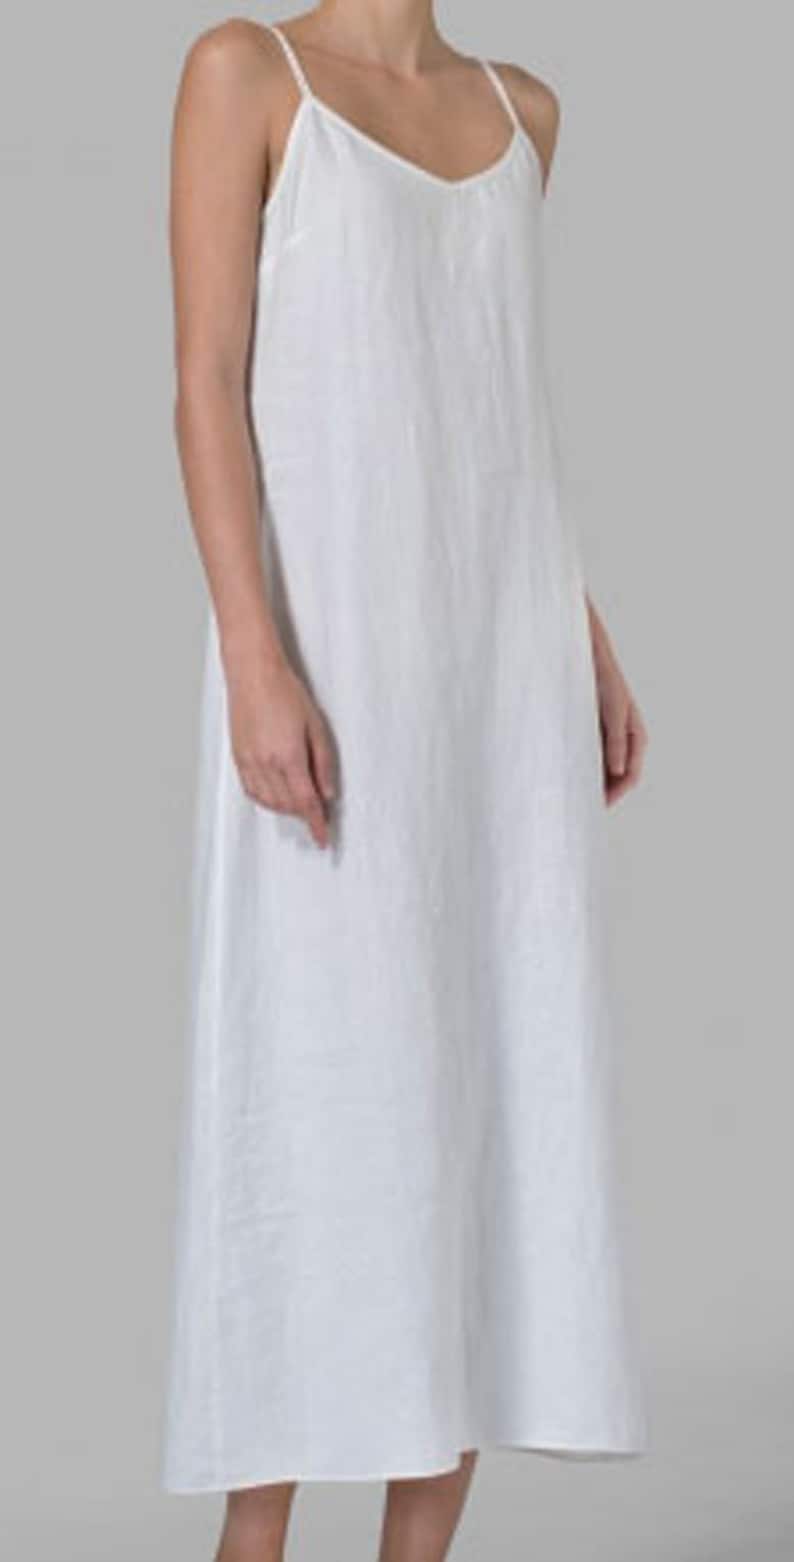 Linen nightdress Linen nightgown Sleepwear Slip Linen night | Etsy